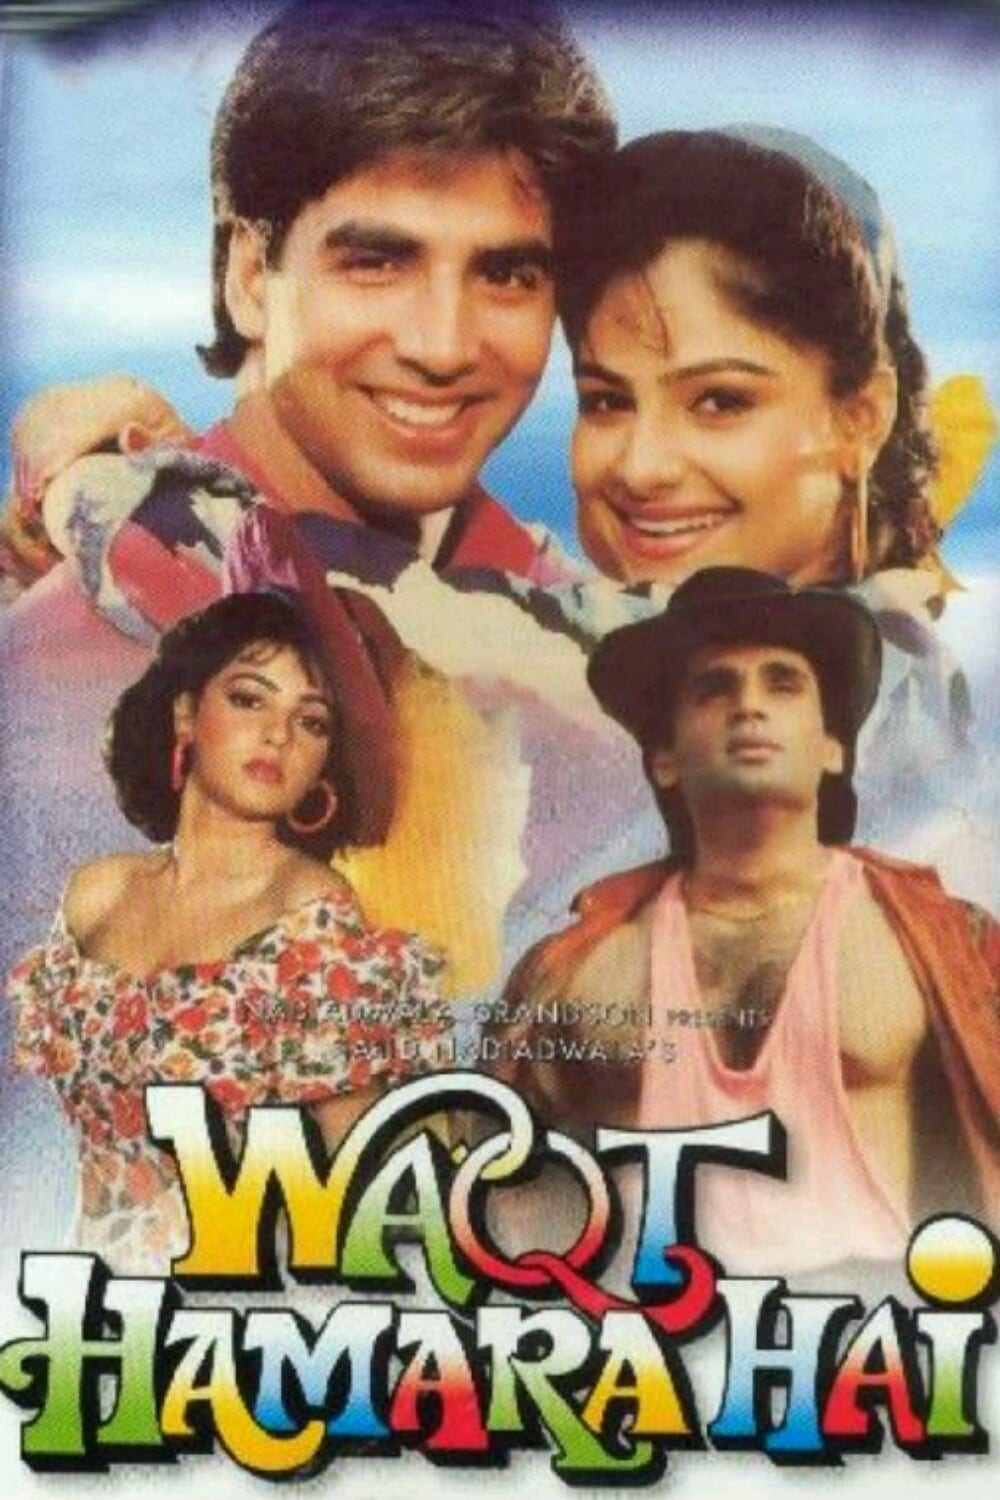 Poster for the movie "Waqt Hamara Hai"